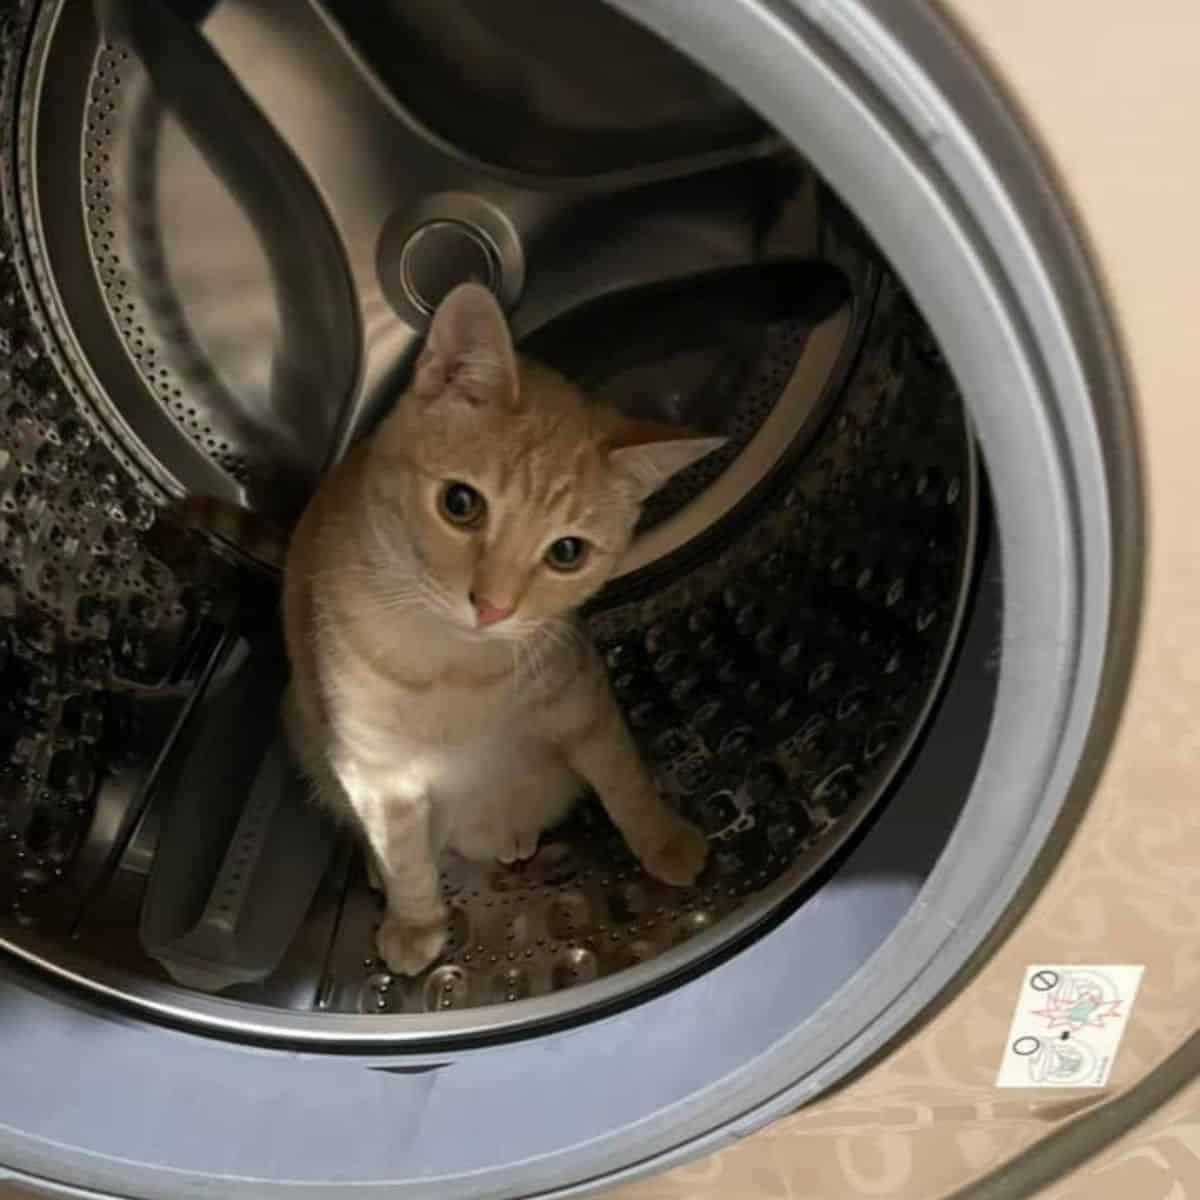 little kitten in a washing machine